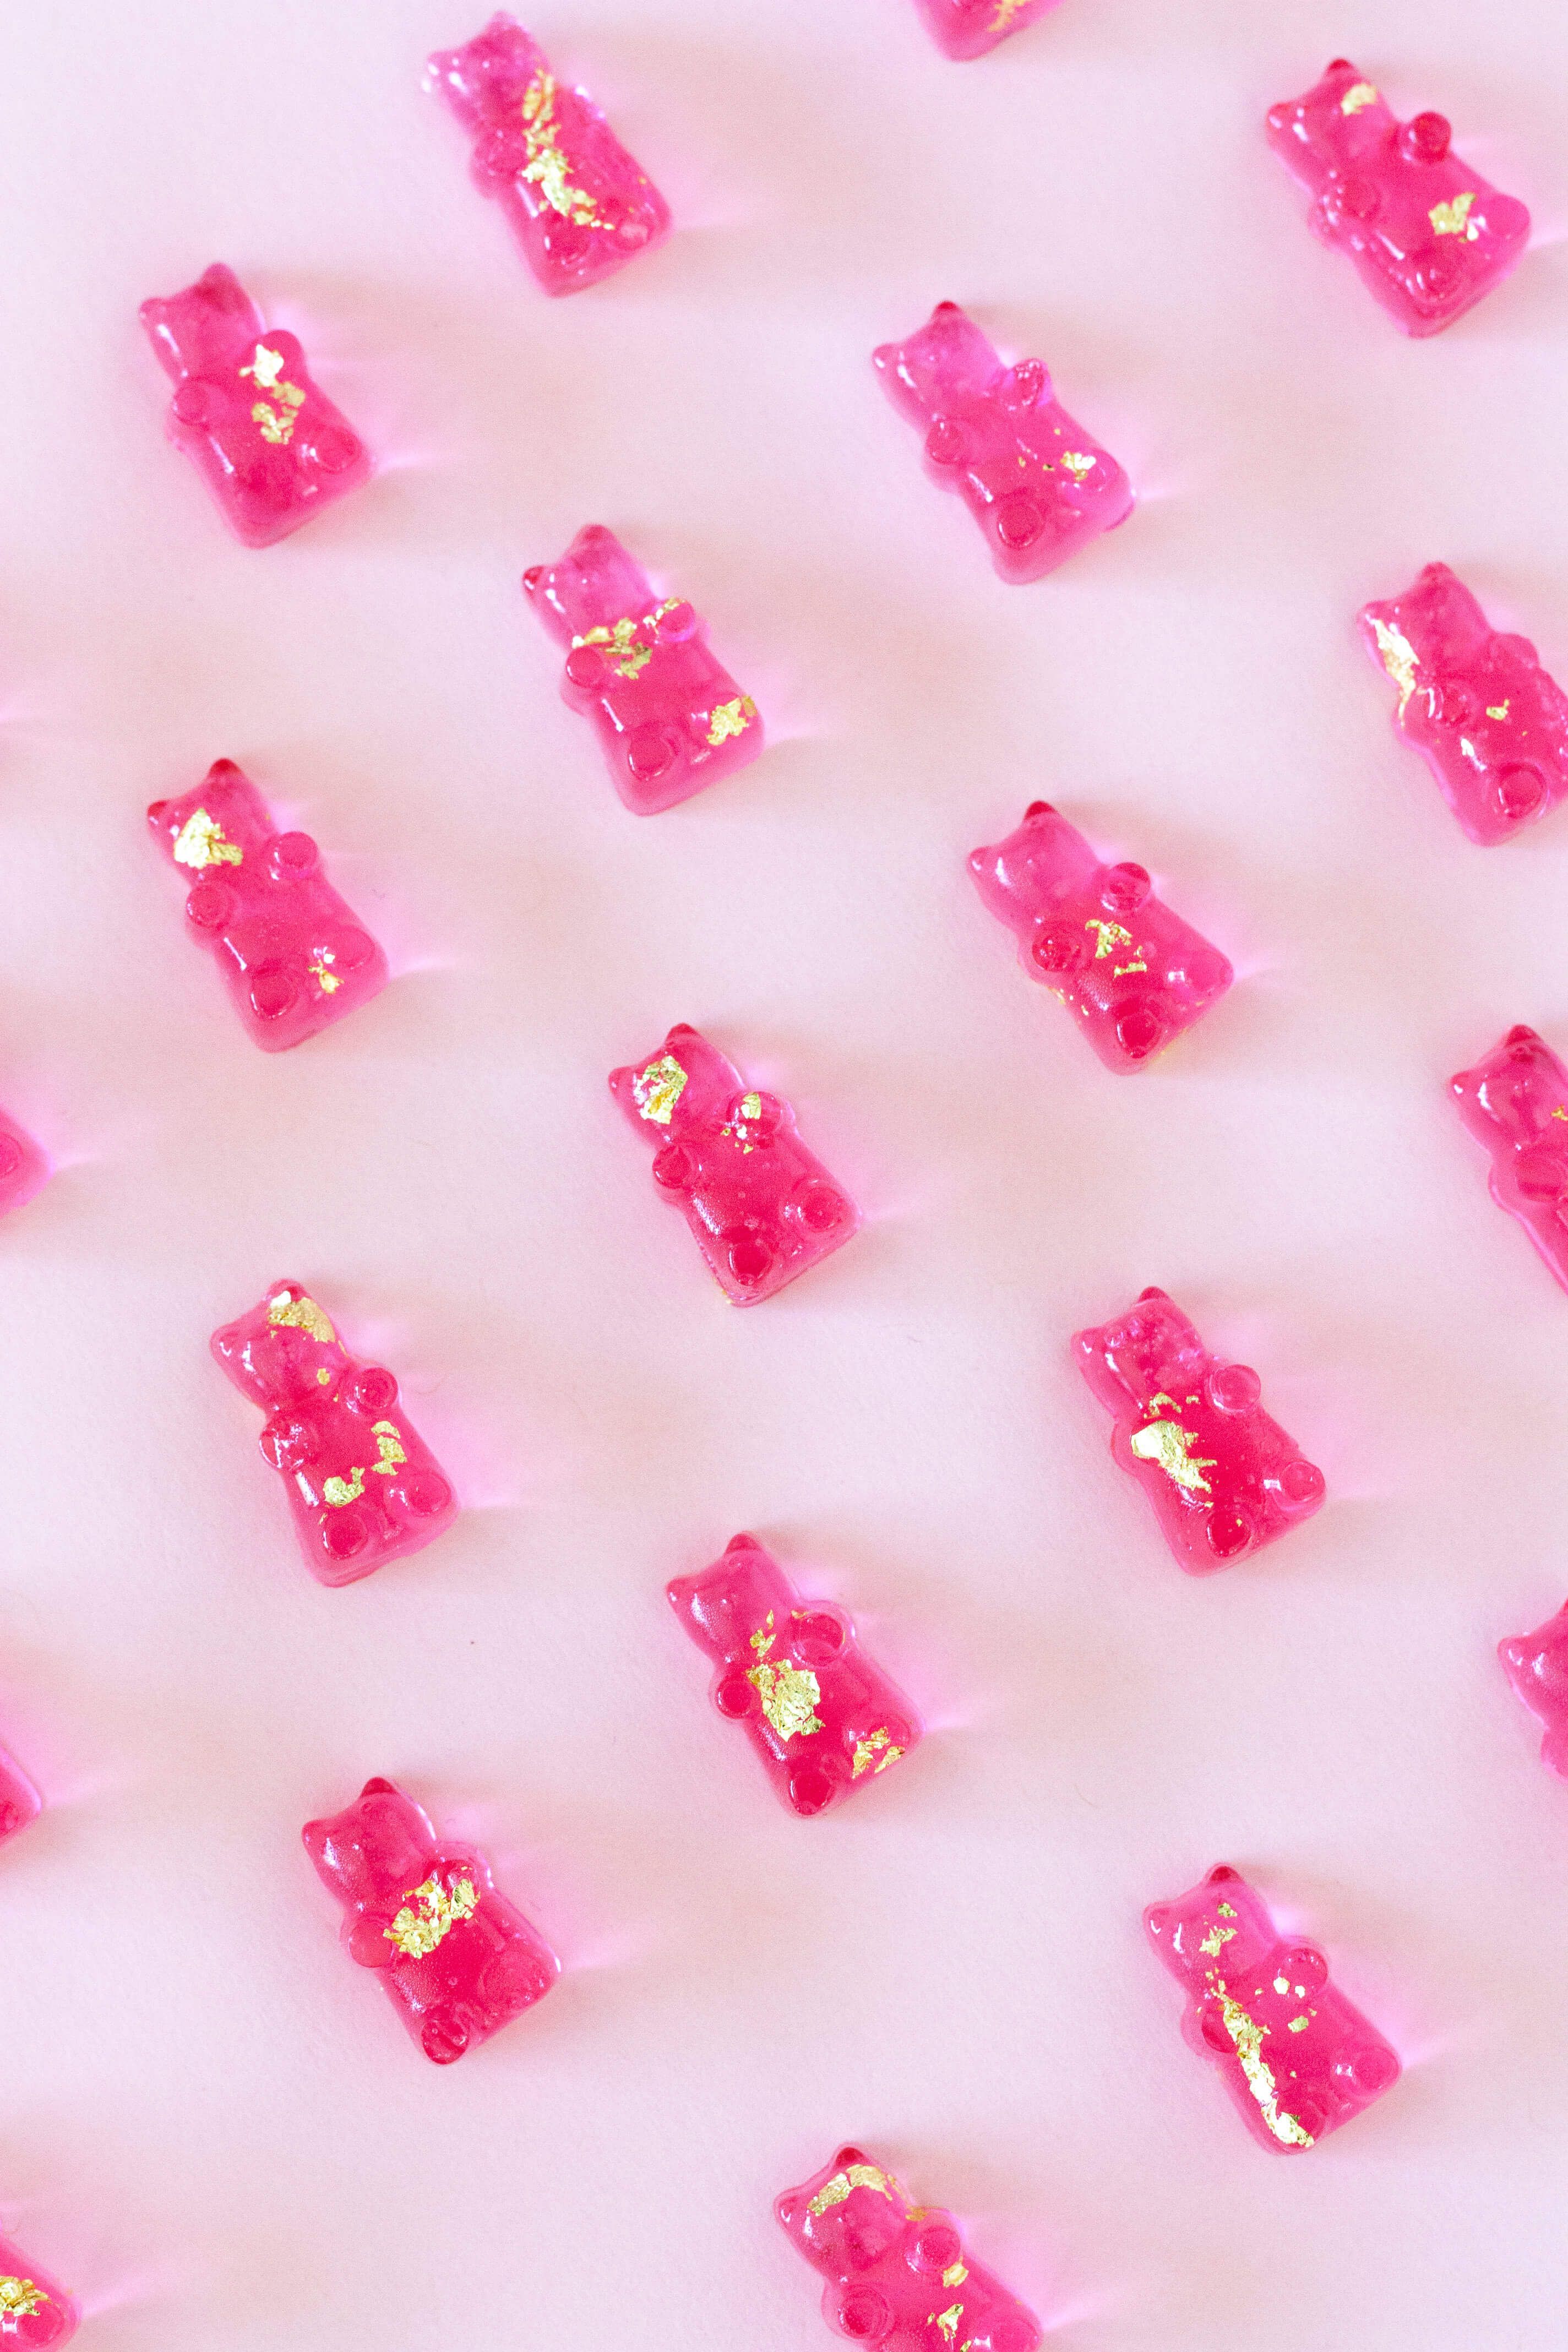 Vegan Rosé Gummy Bears Emmygination. Recipe. Candy photography, Gummy bears, Pink